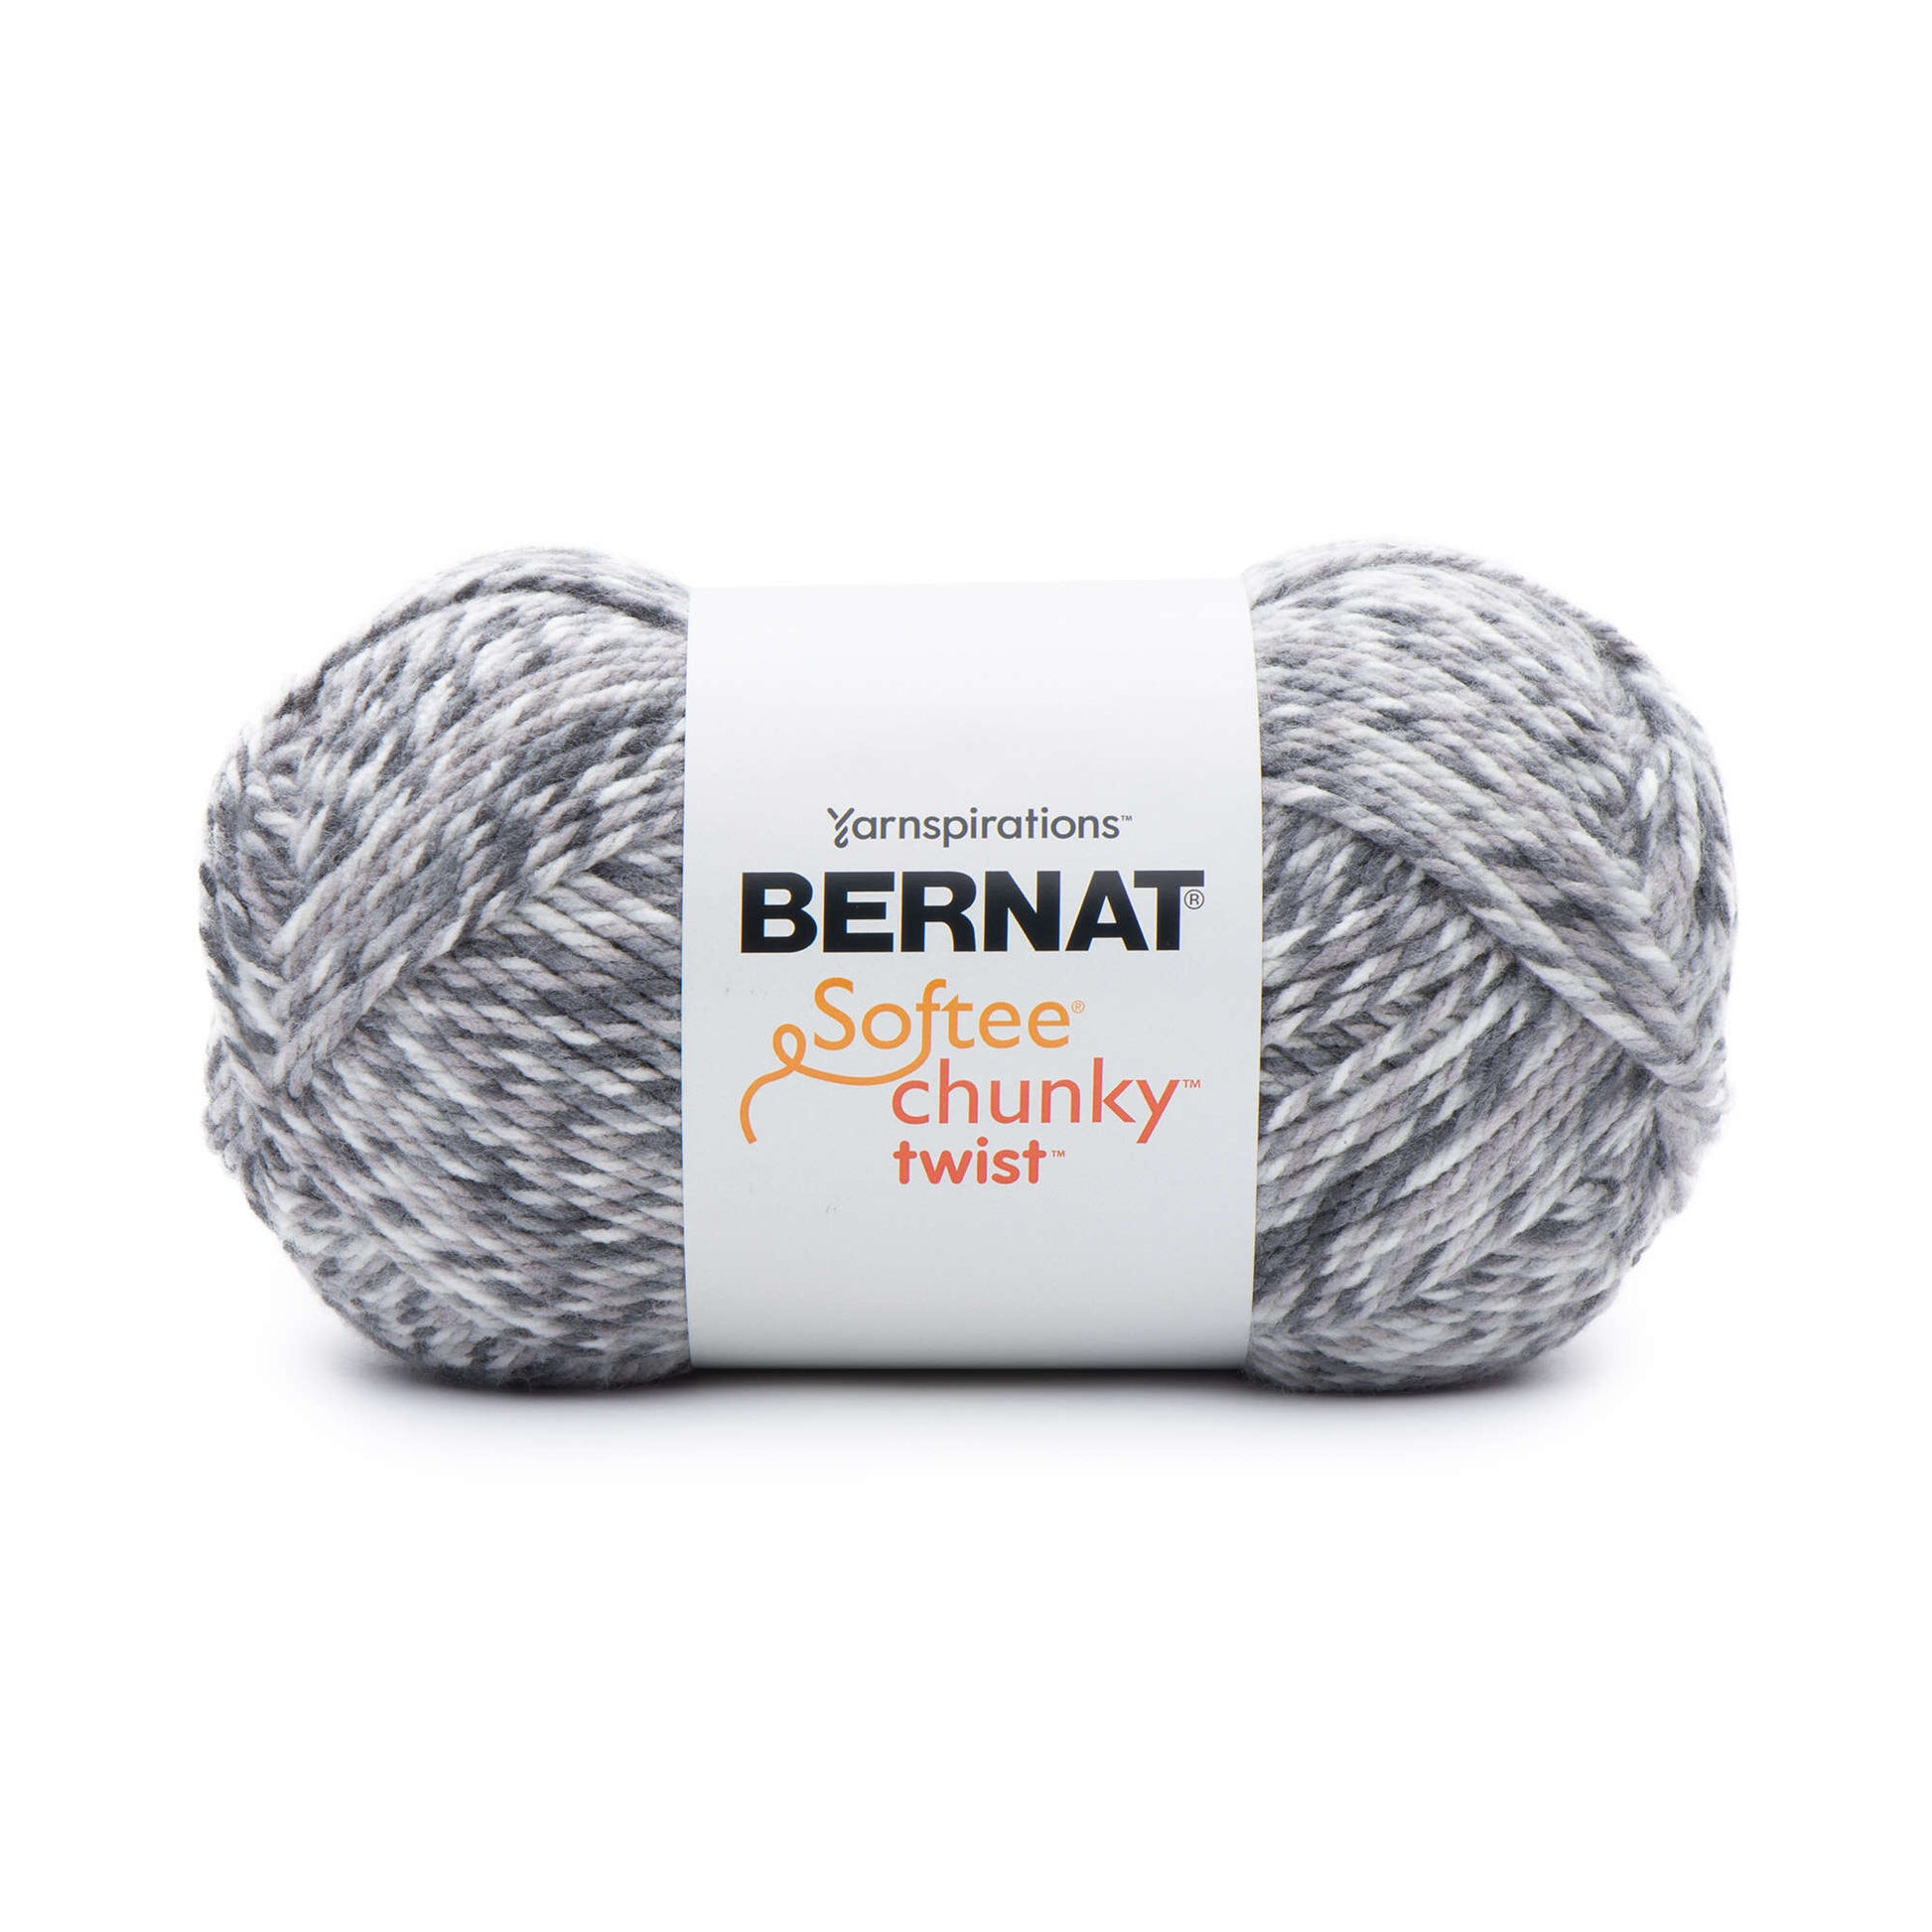 Bernat Softee Chunky Twist Yarn (300g/10.5oz) - Discontinued Shades